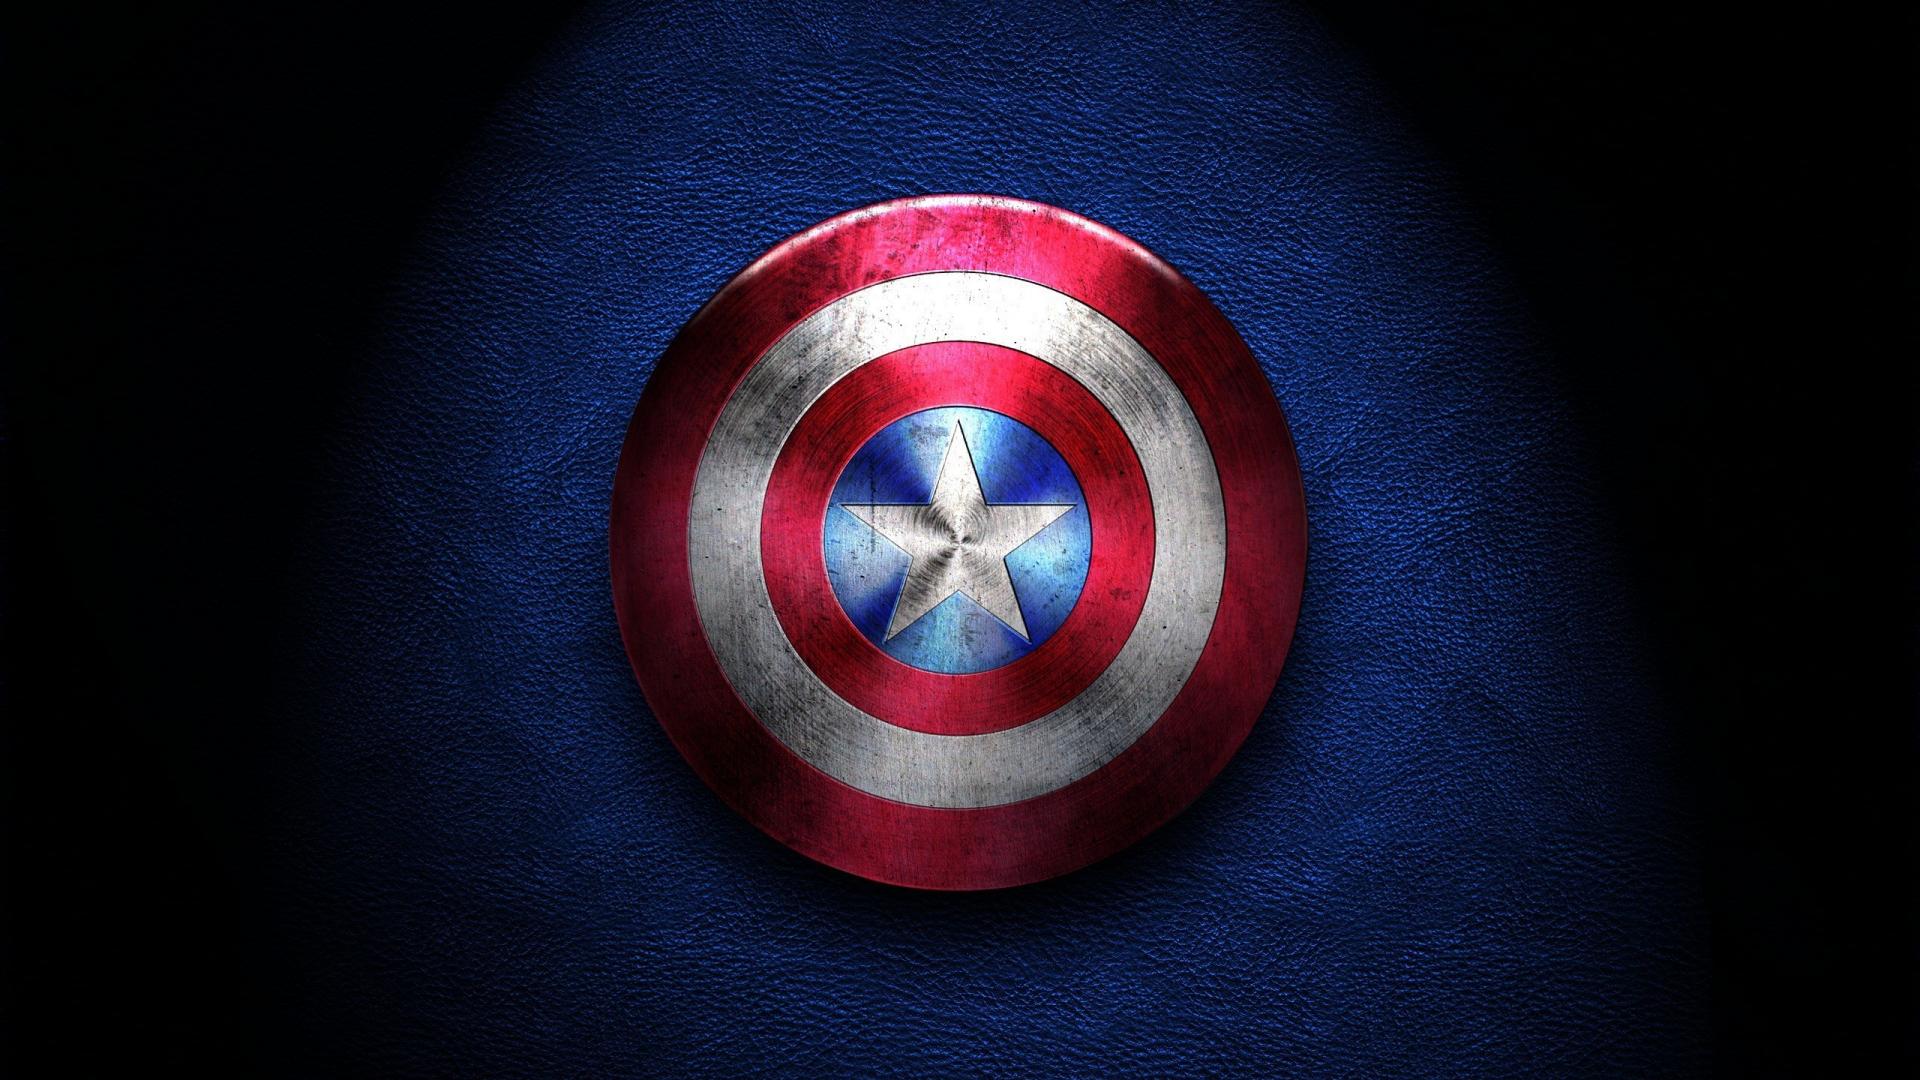 Captain america marvel comics artwork logos shield wallpaper | (51126)